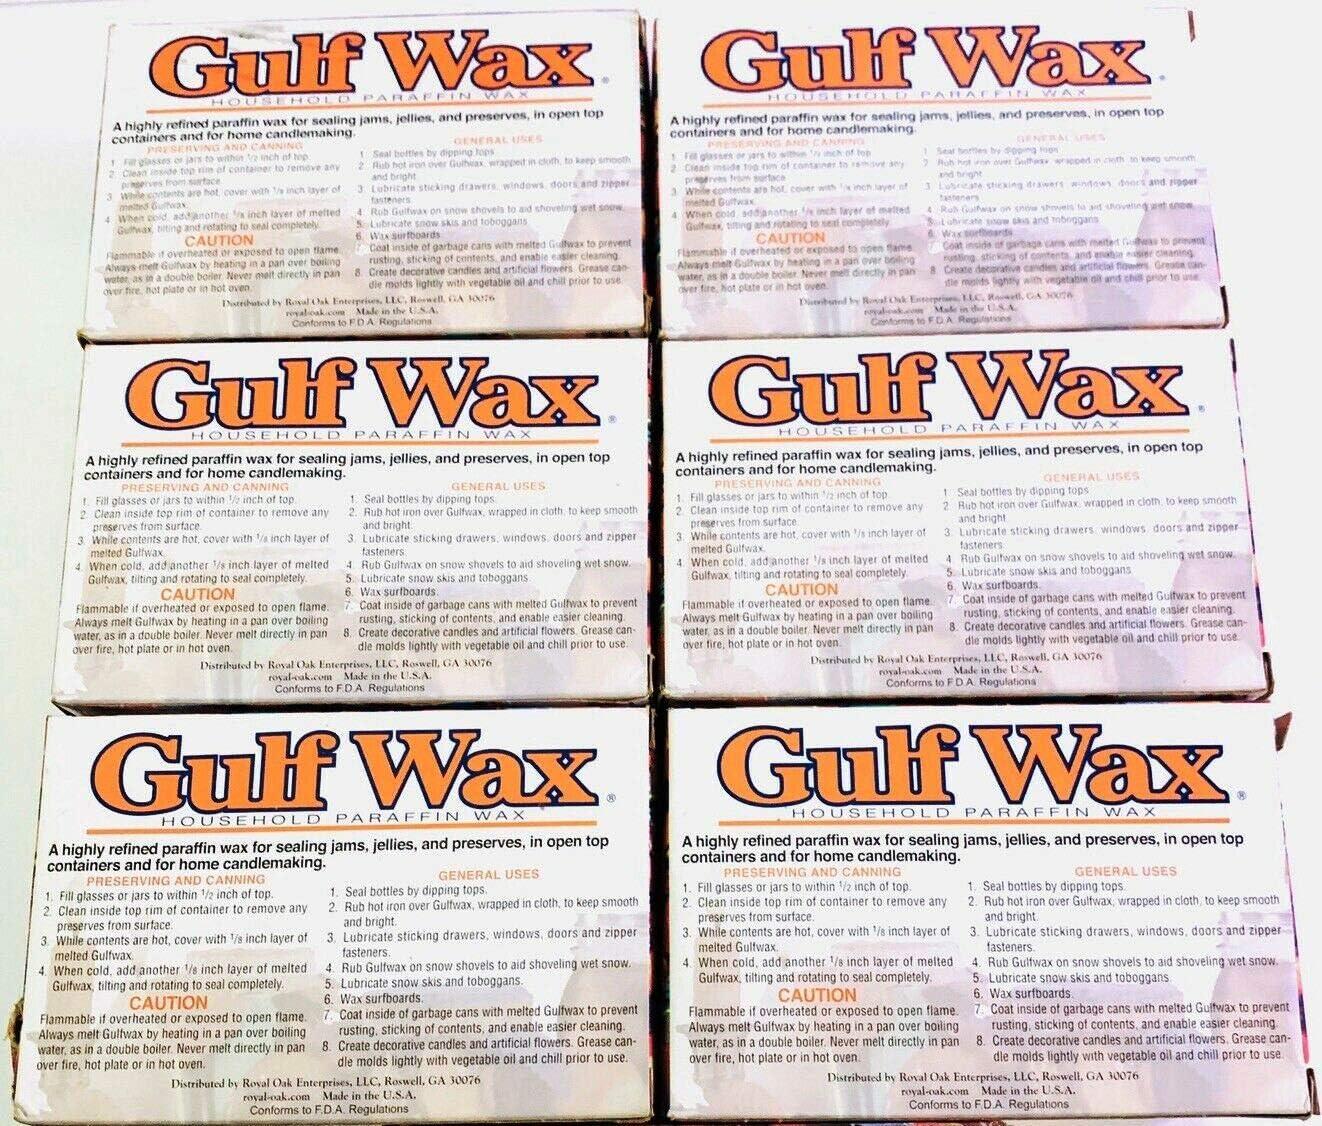 Gulf Wax Household Paraffin Wax, 1-Lb. 1 Pack